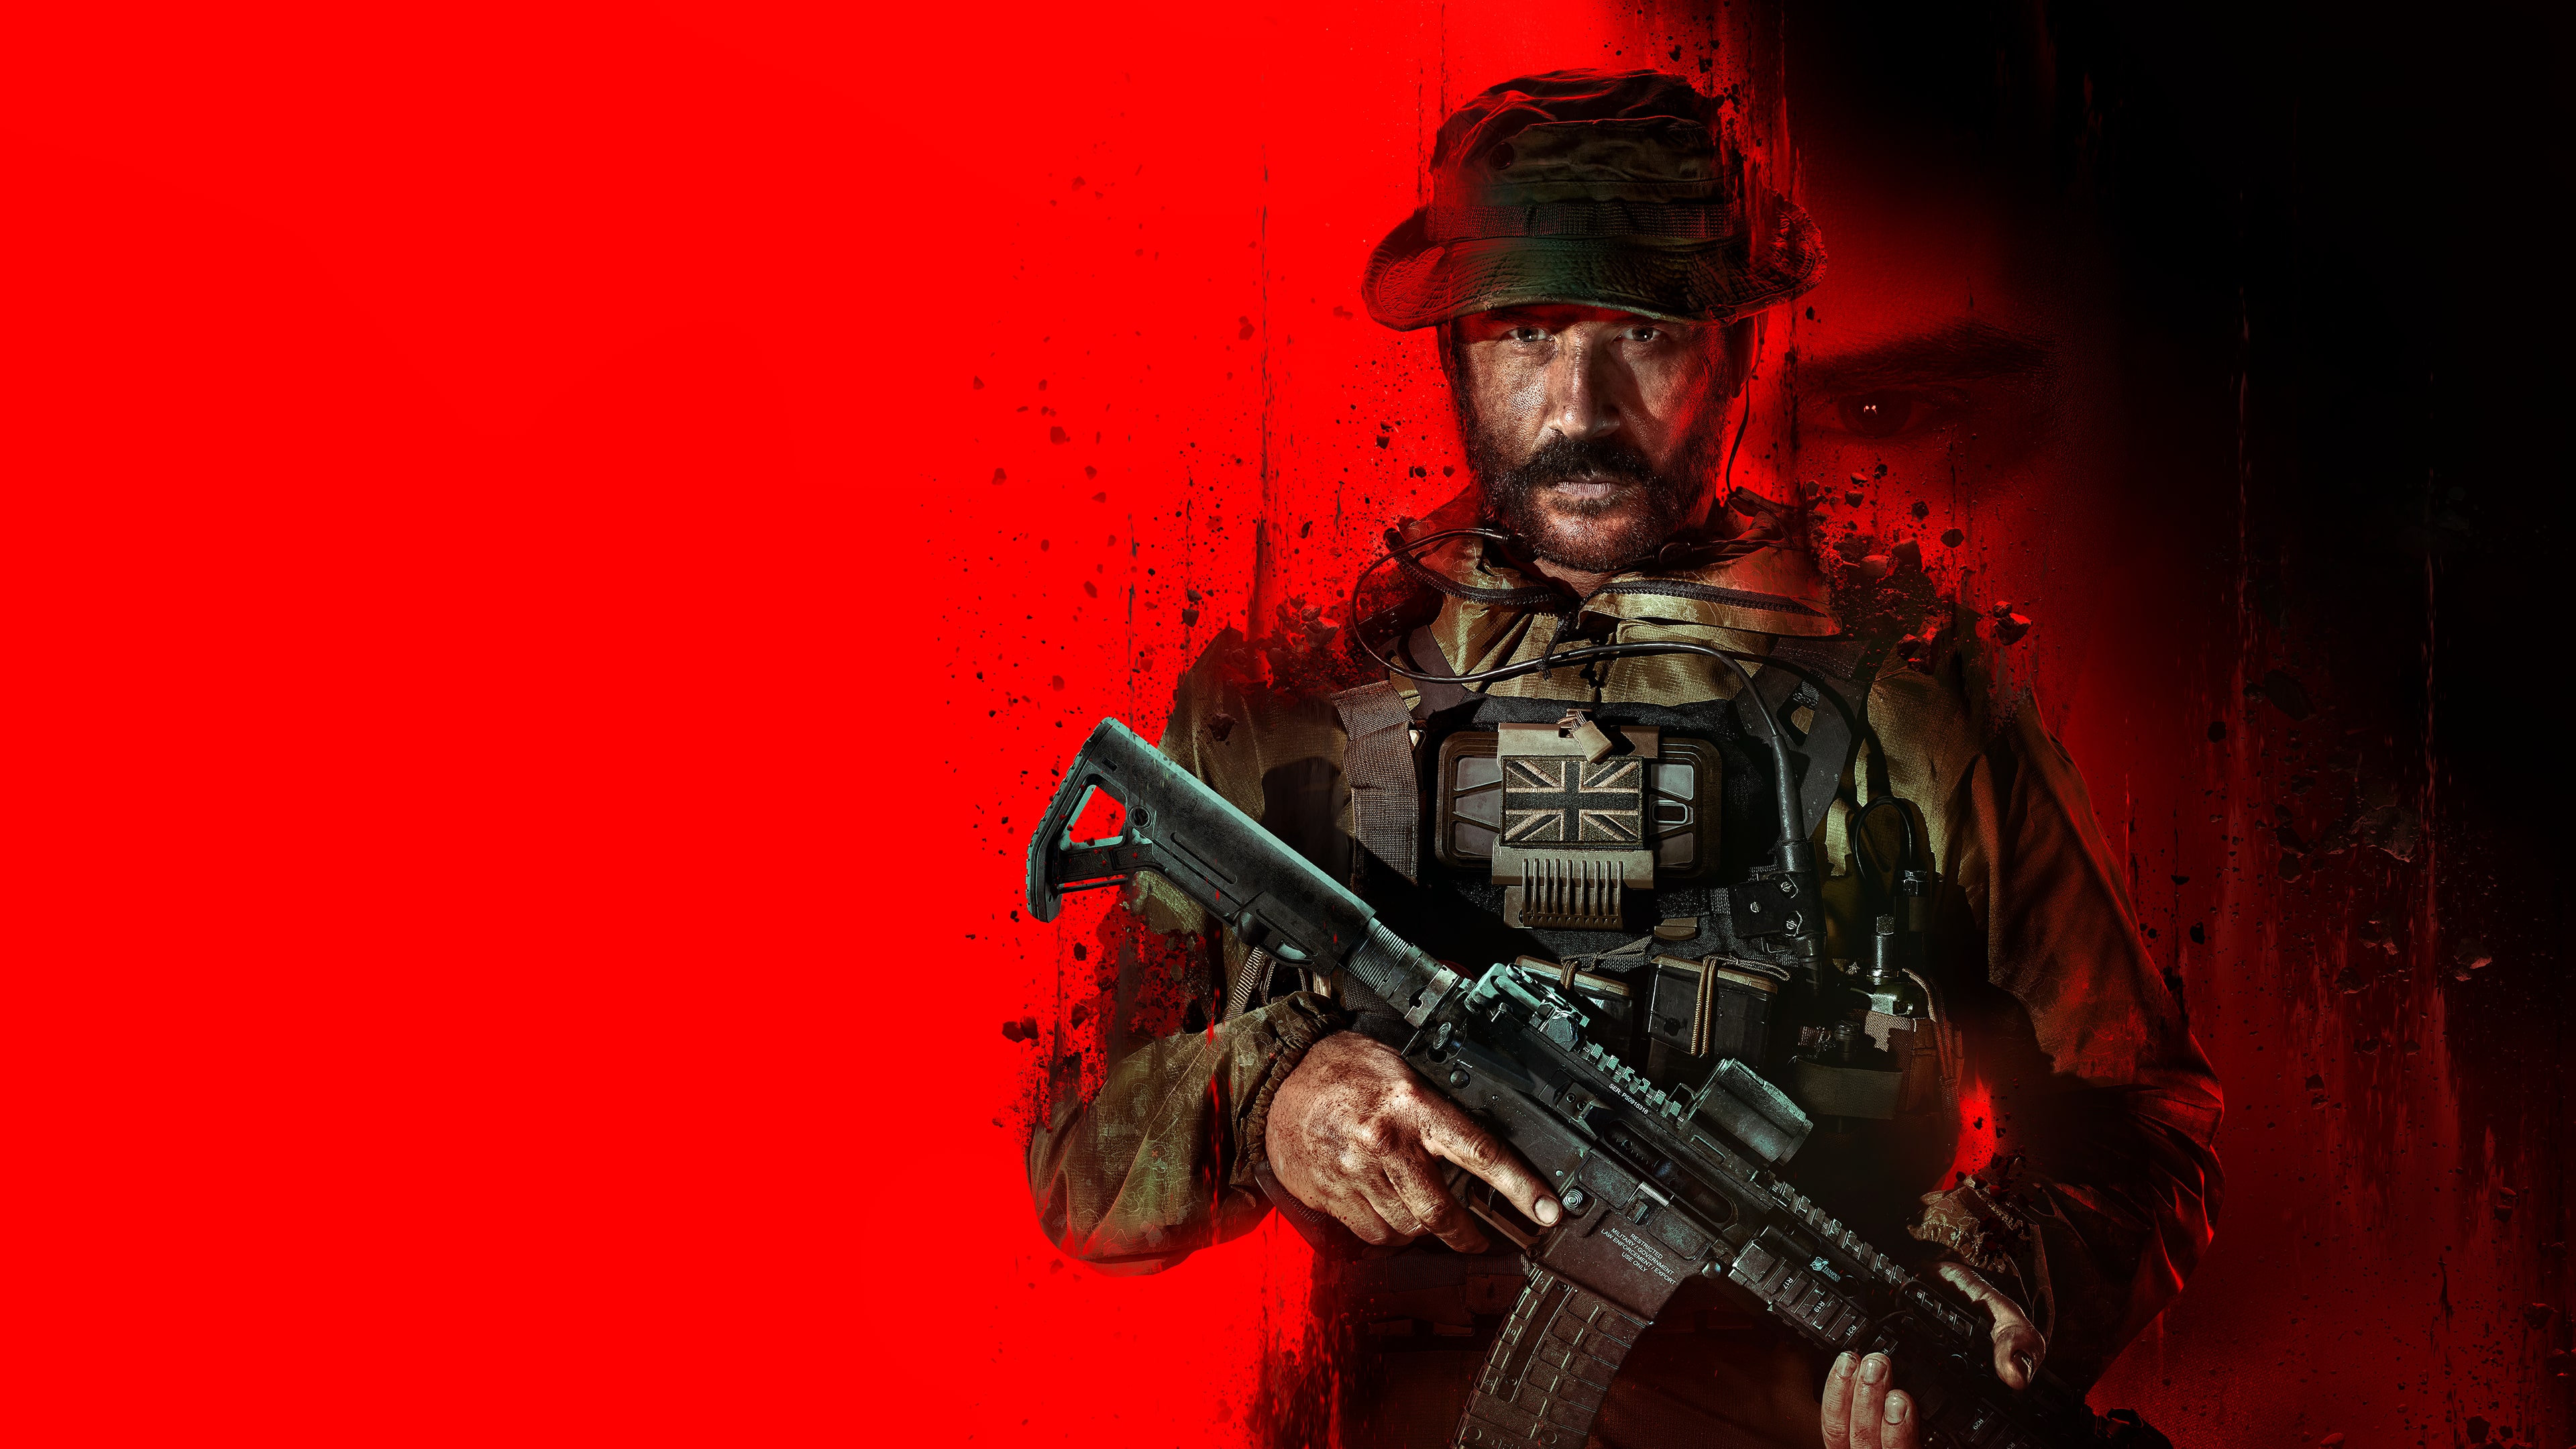  Call of Duty: Modern Warfare 3 - Playstation 3 : Activision  Inc: Video Games